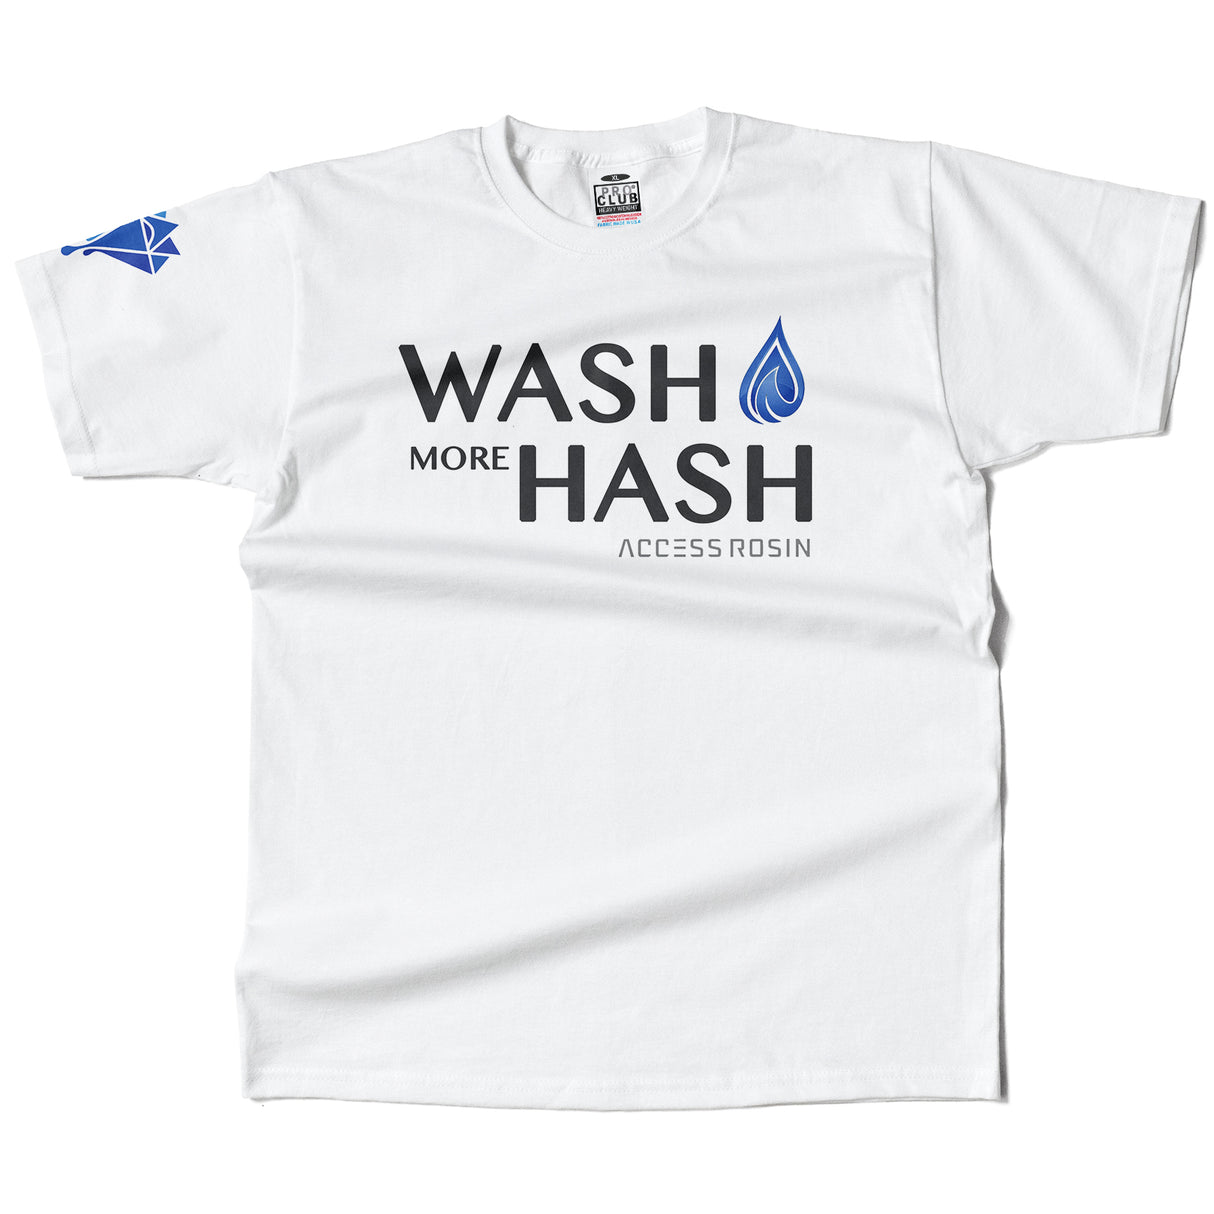 Wash More Hash - White - Access Rosin